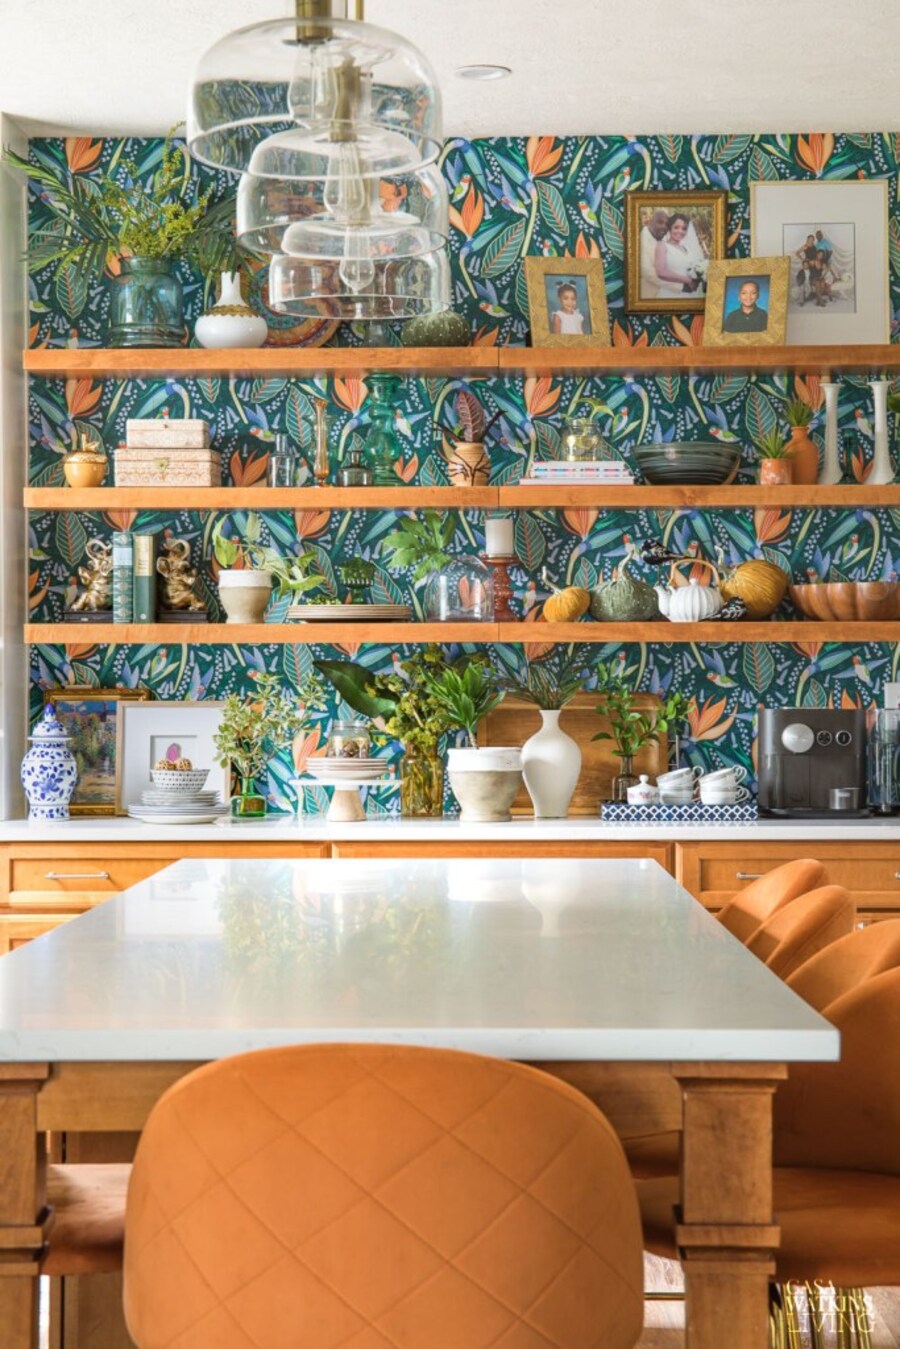 Papel mural tras repisas en comedor de diario, de estilo tropical.